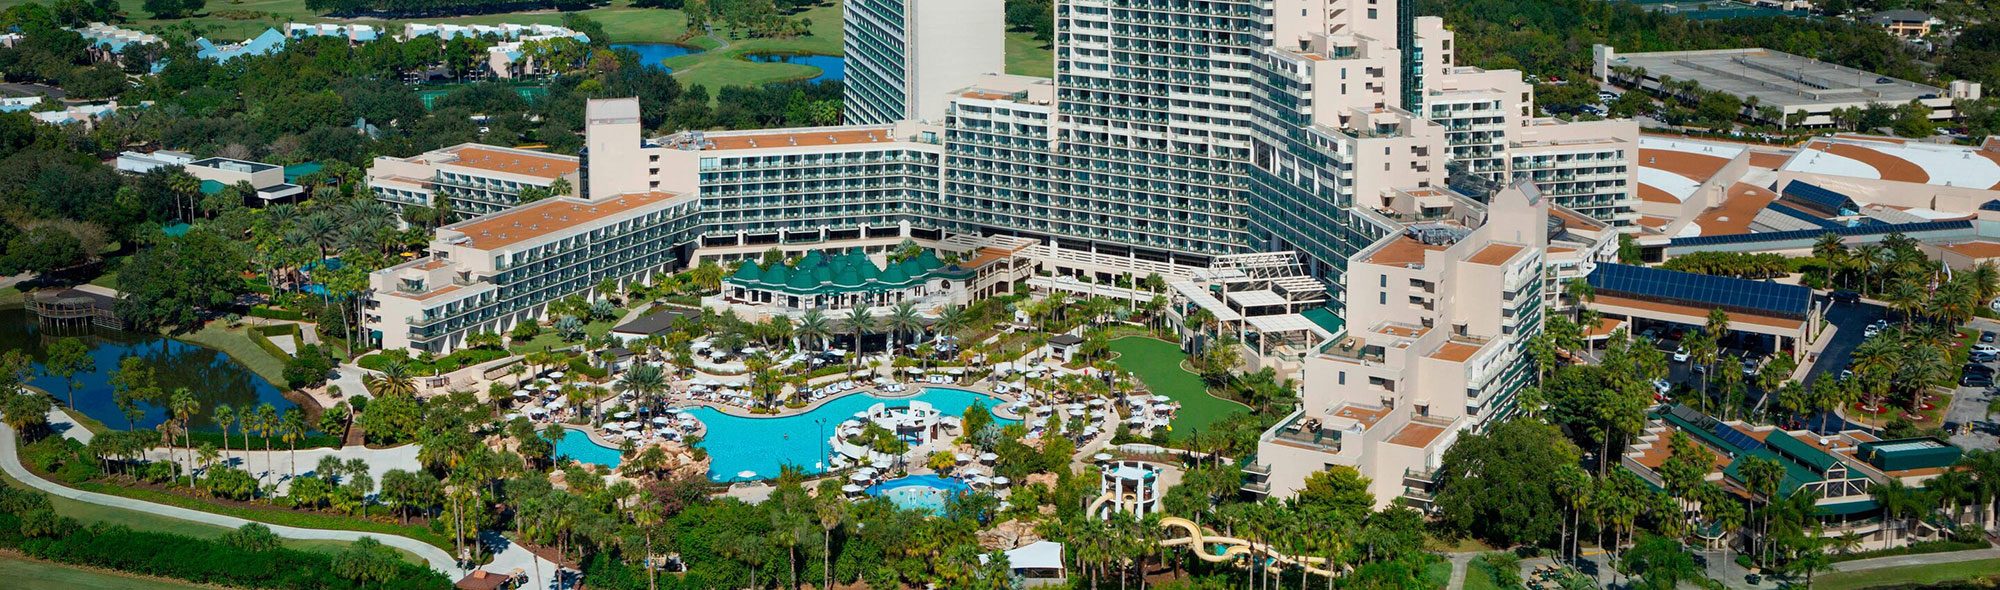 Orlando World Center Marriott 8701 World Center Drive Orlando, Florida 32821